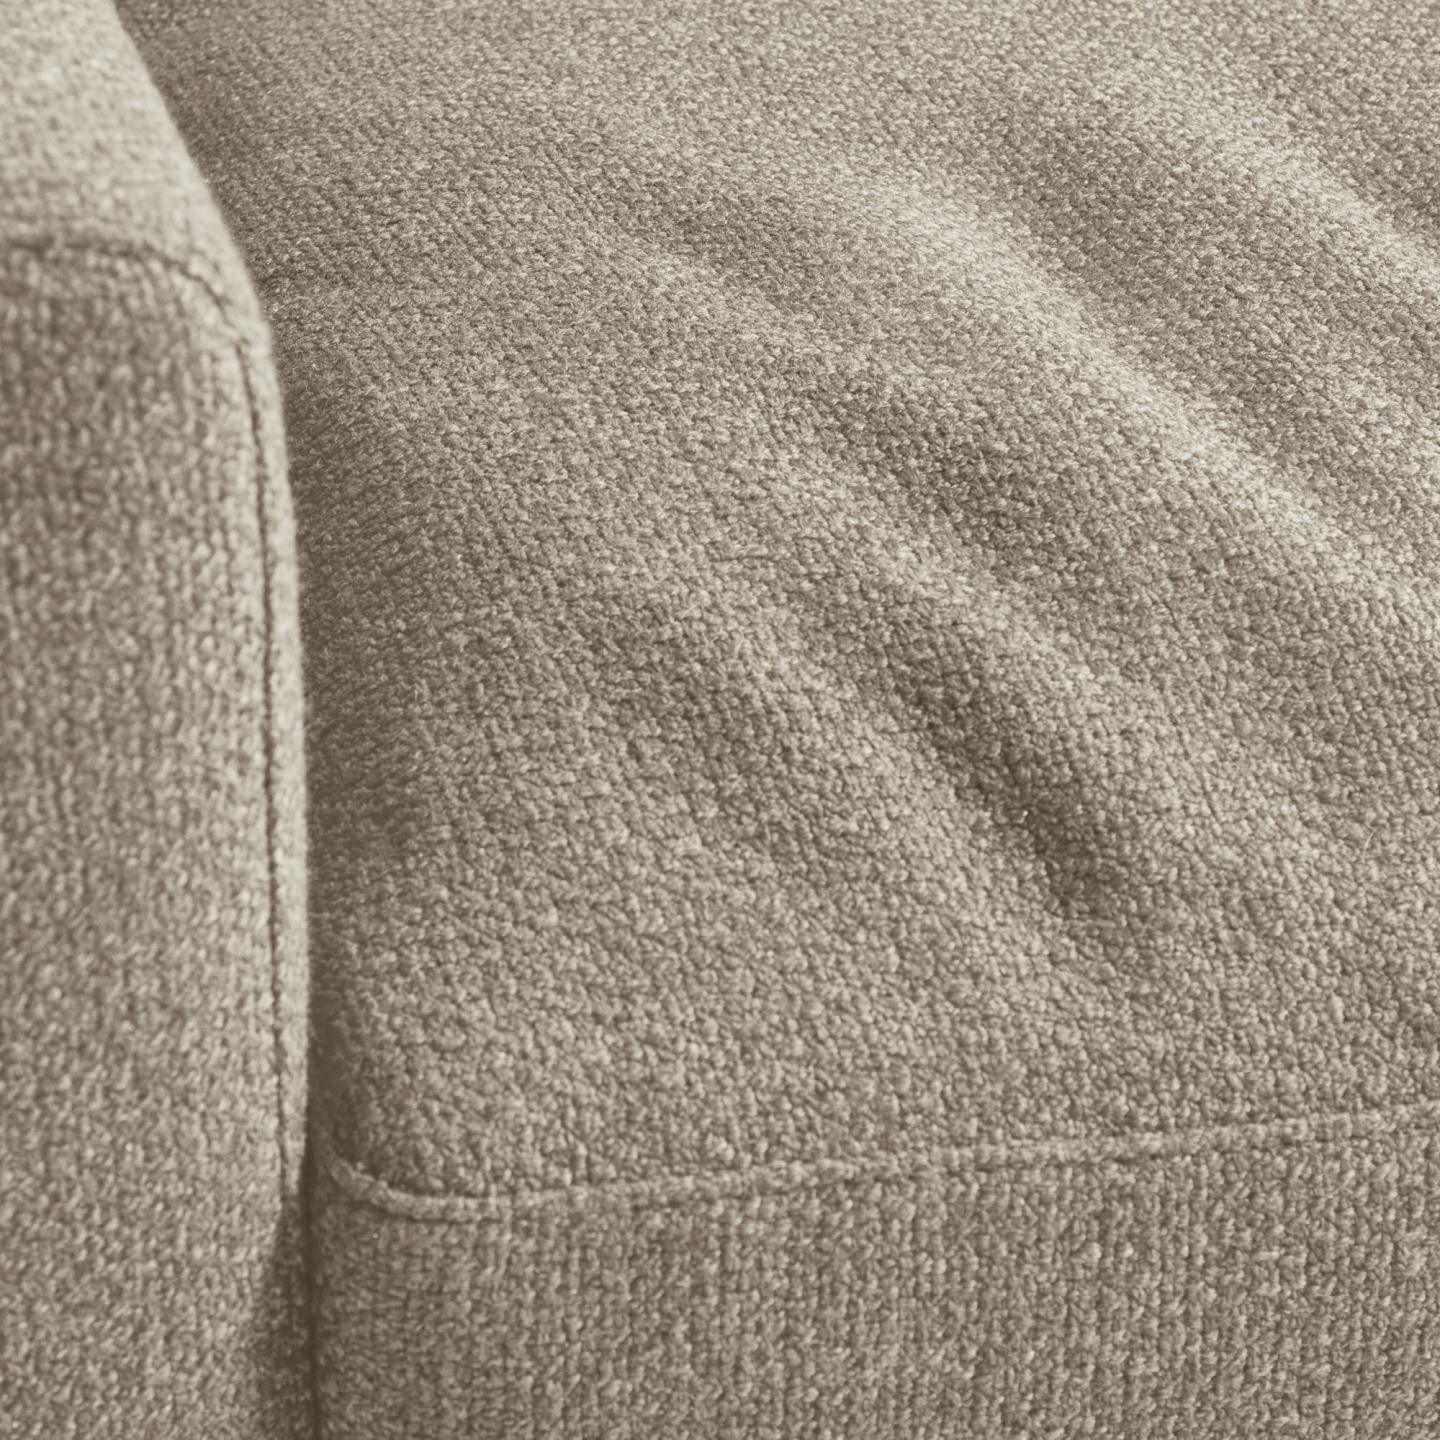 Fabric Sofa W/ Wood Legs